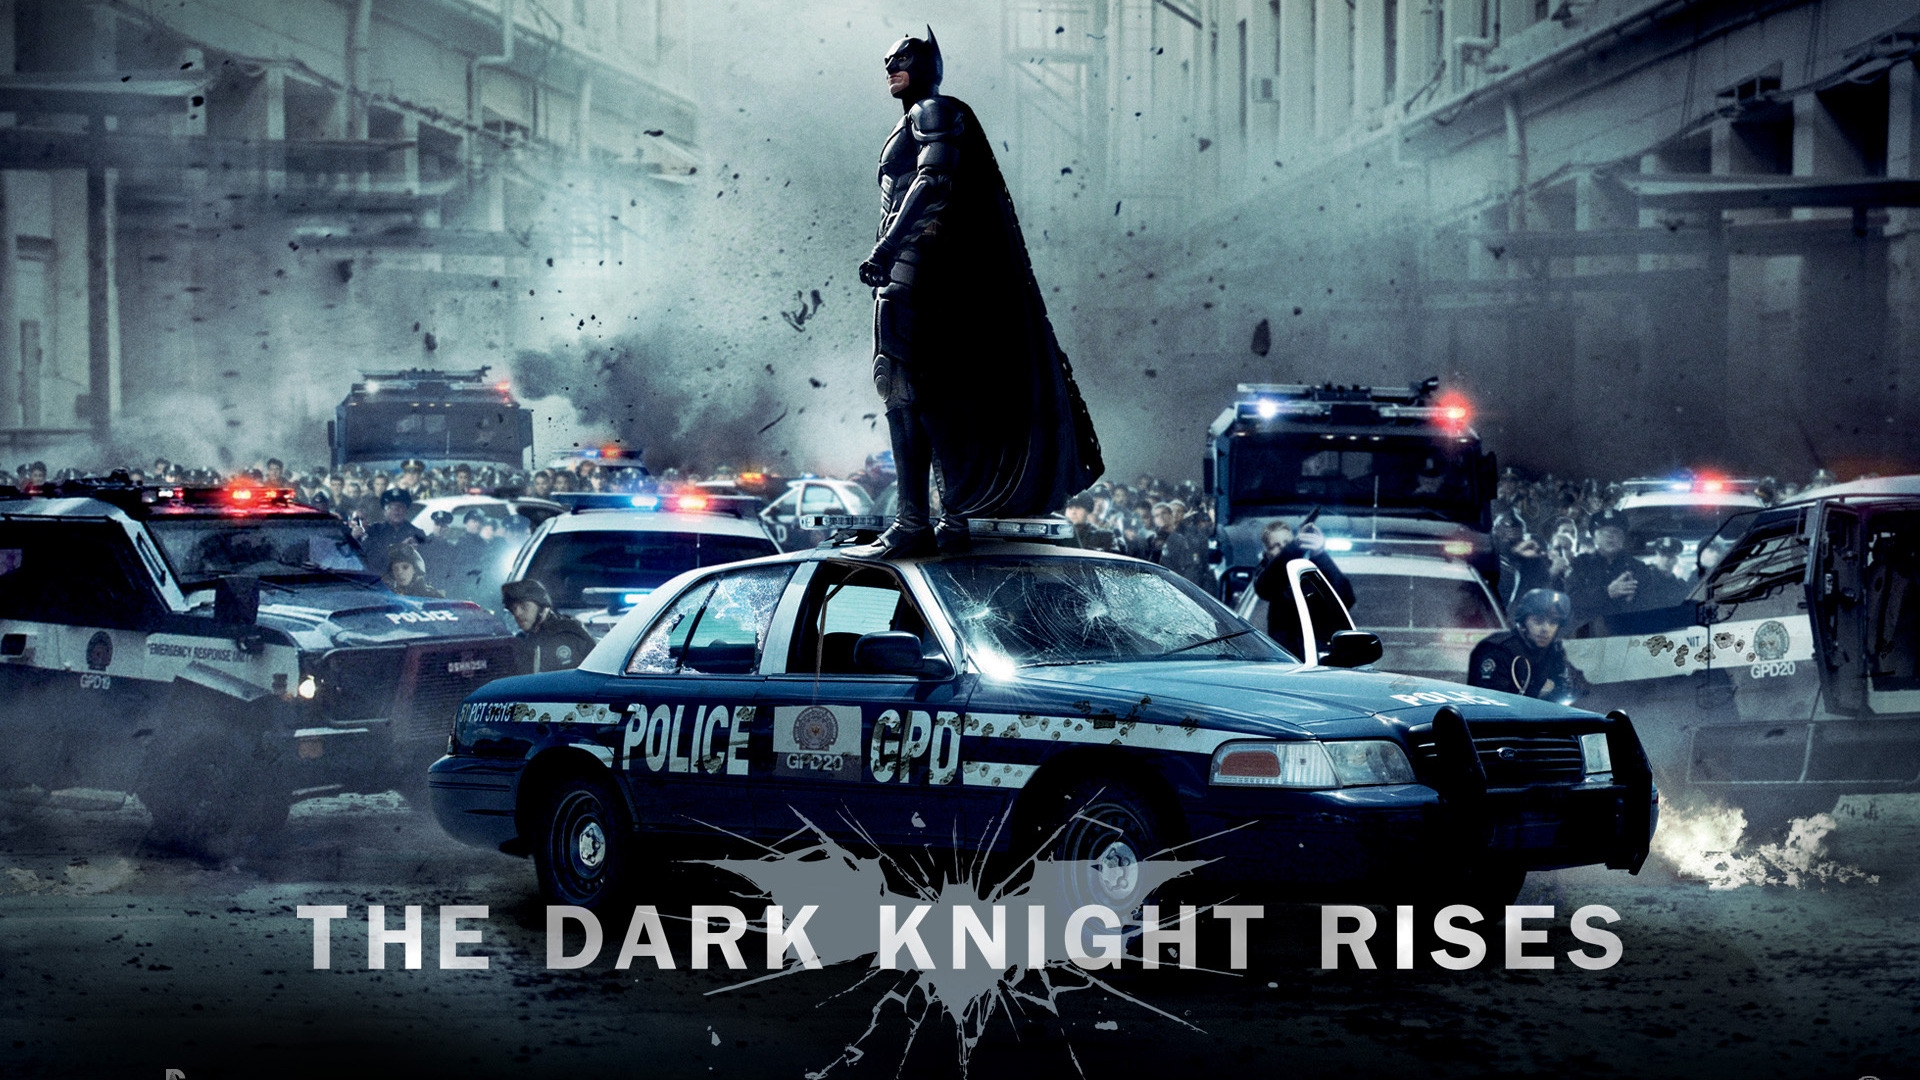 Batman The Dark Knight Rises for 1920 x 1080 HDTV 1080p resolution